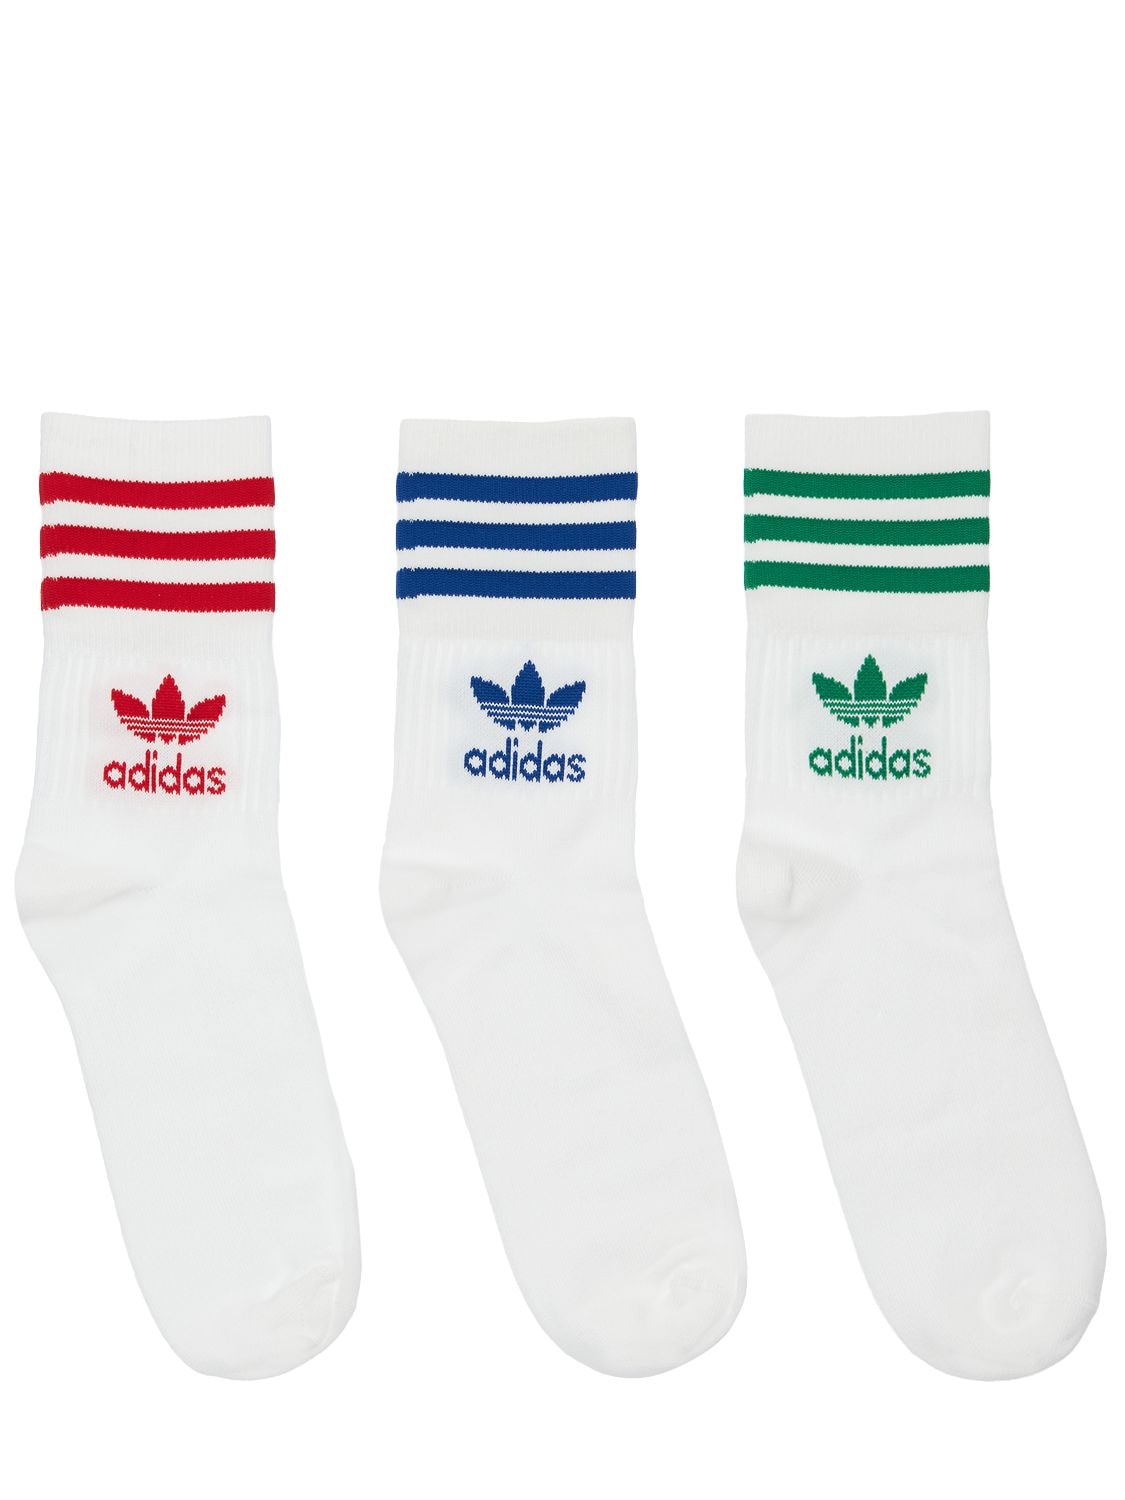 Adidas Originals Pack Of 3 Mid Cut Solid Crew Socks In White,multi